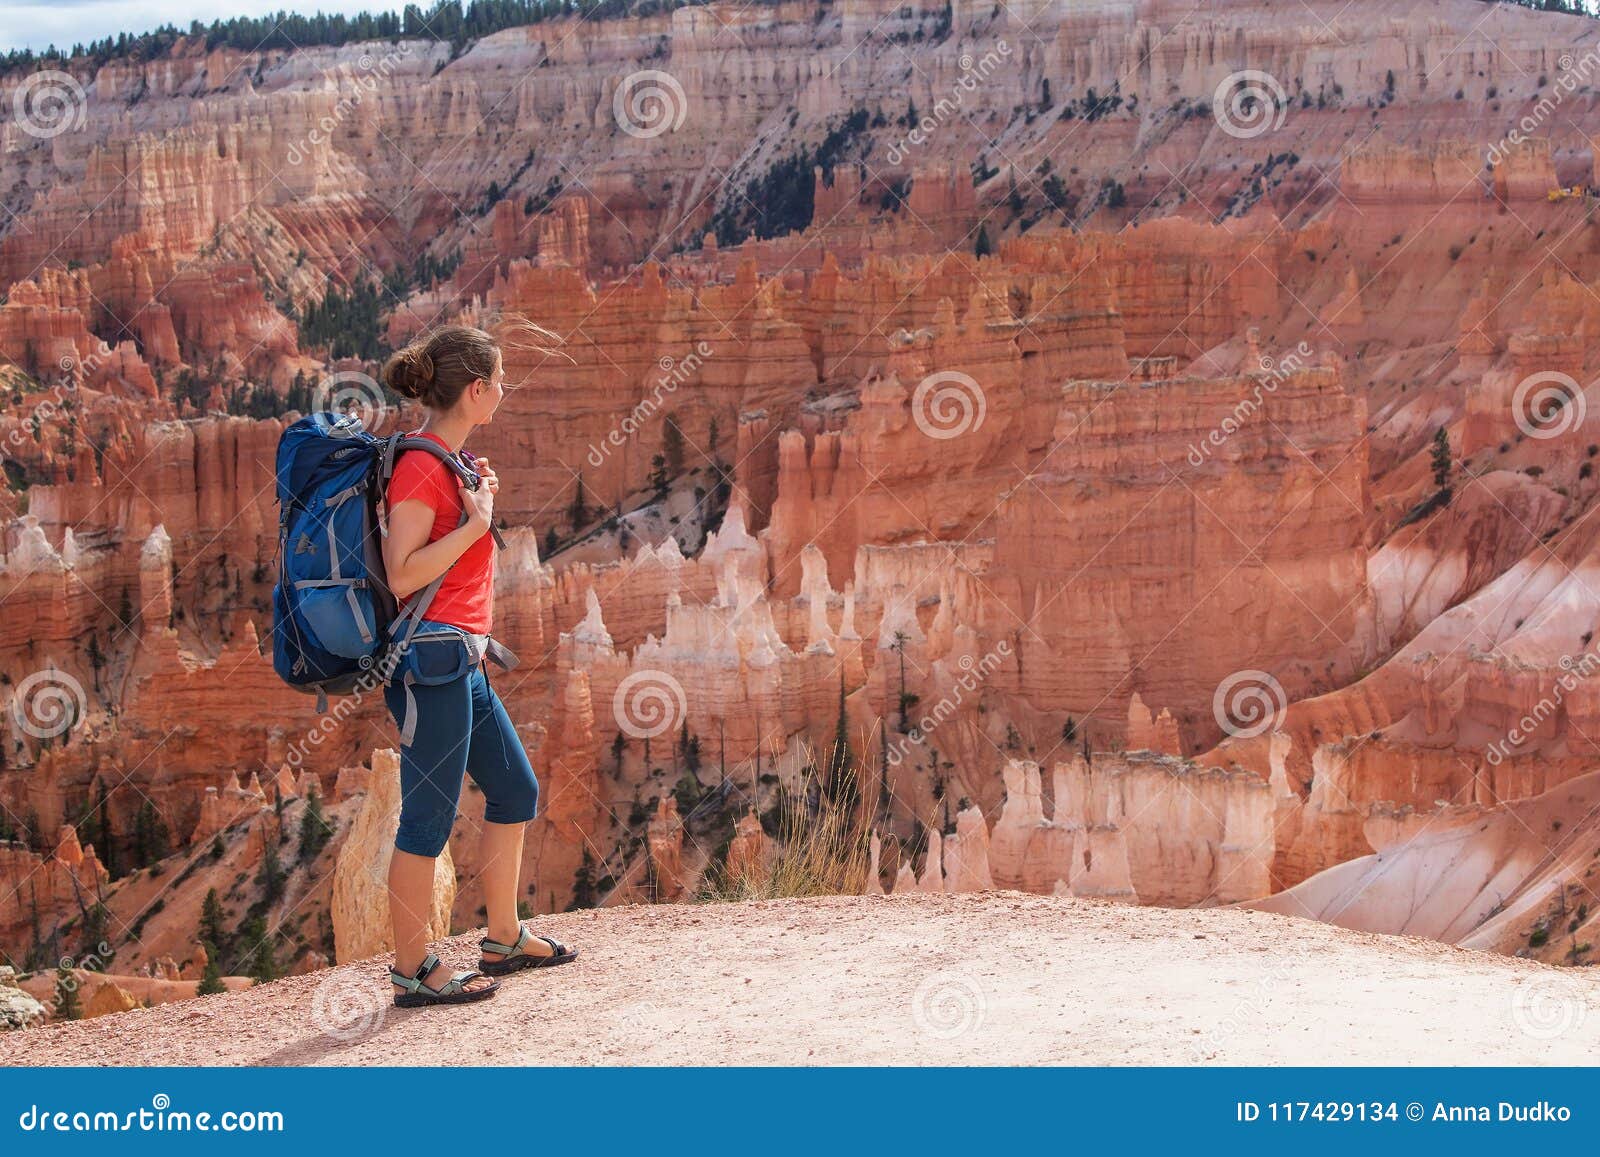 hiker visits bryce canyon national park in utah, usa